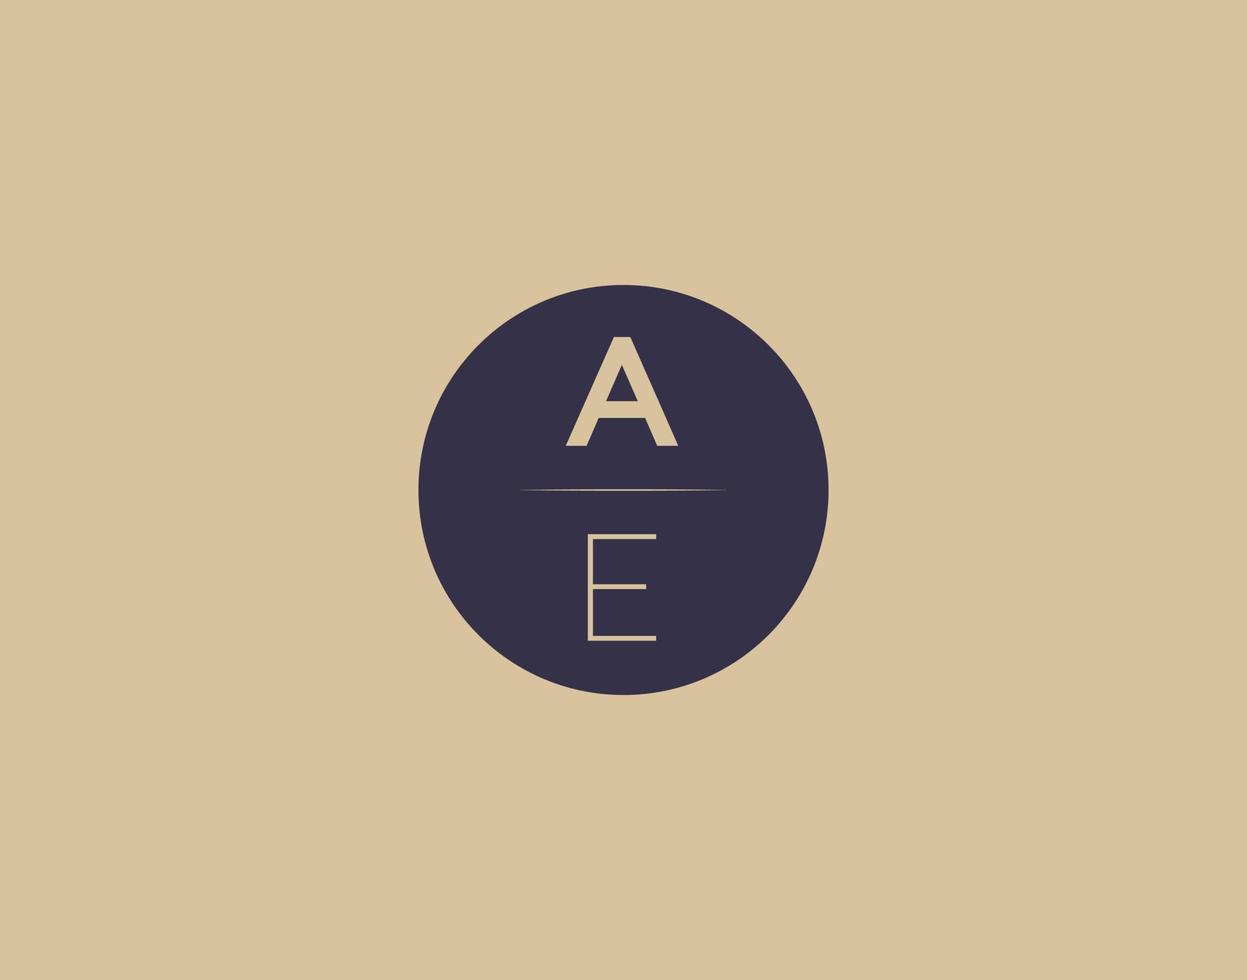 AE letter modern elegant logo design vector images